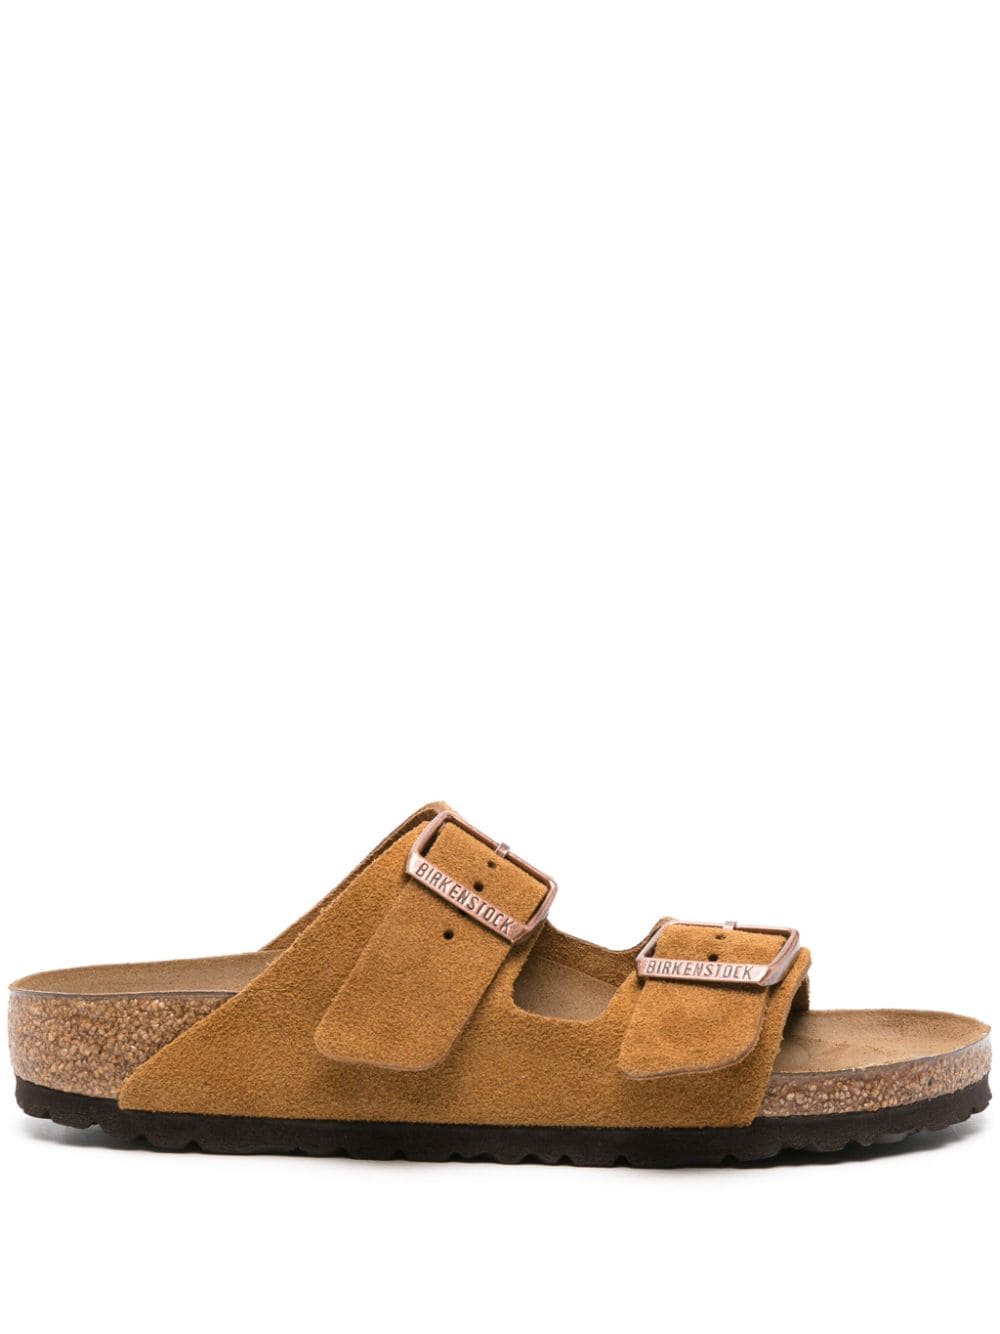 Birkenstock Arizona suede flat sandals - Brown von Birkenstock